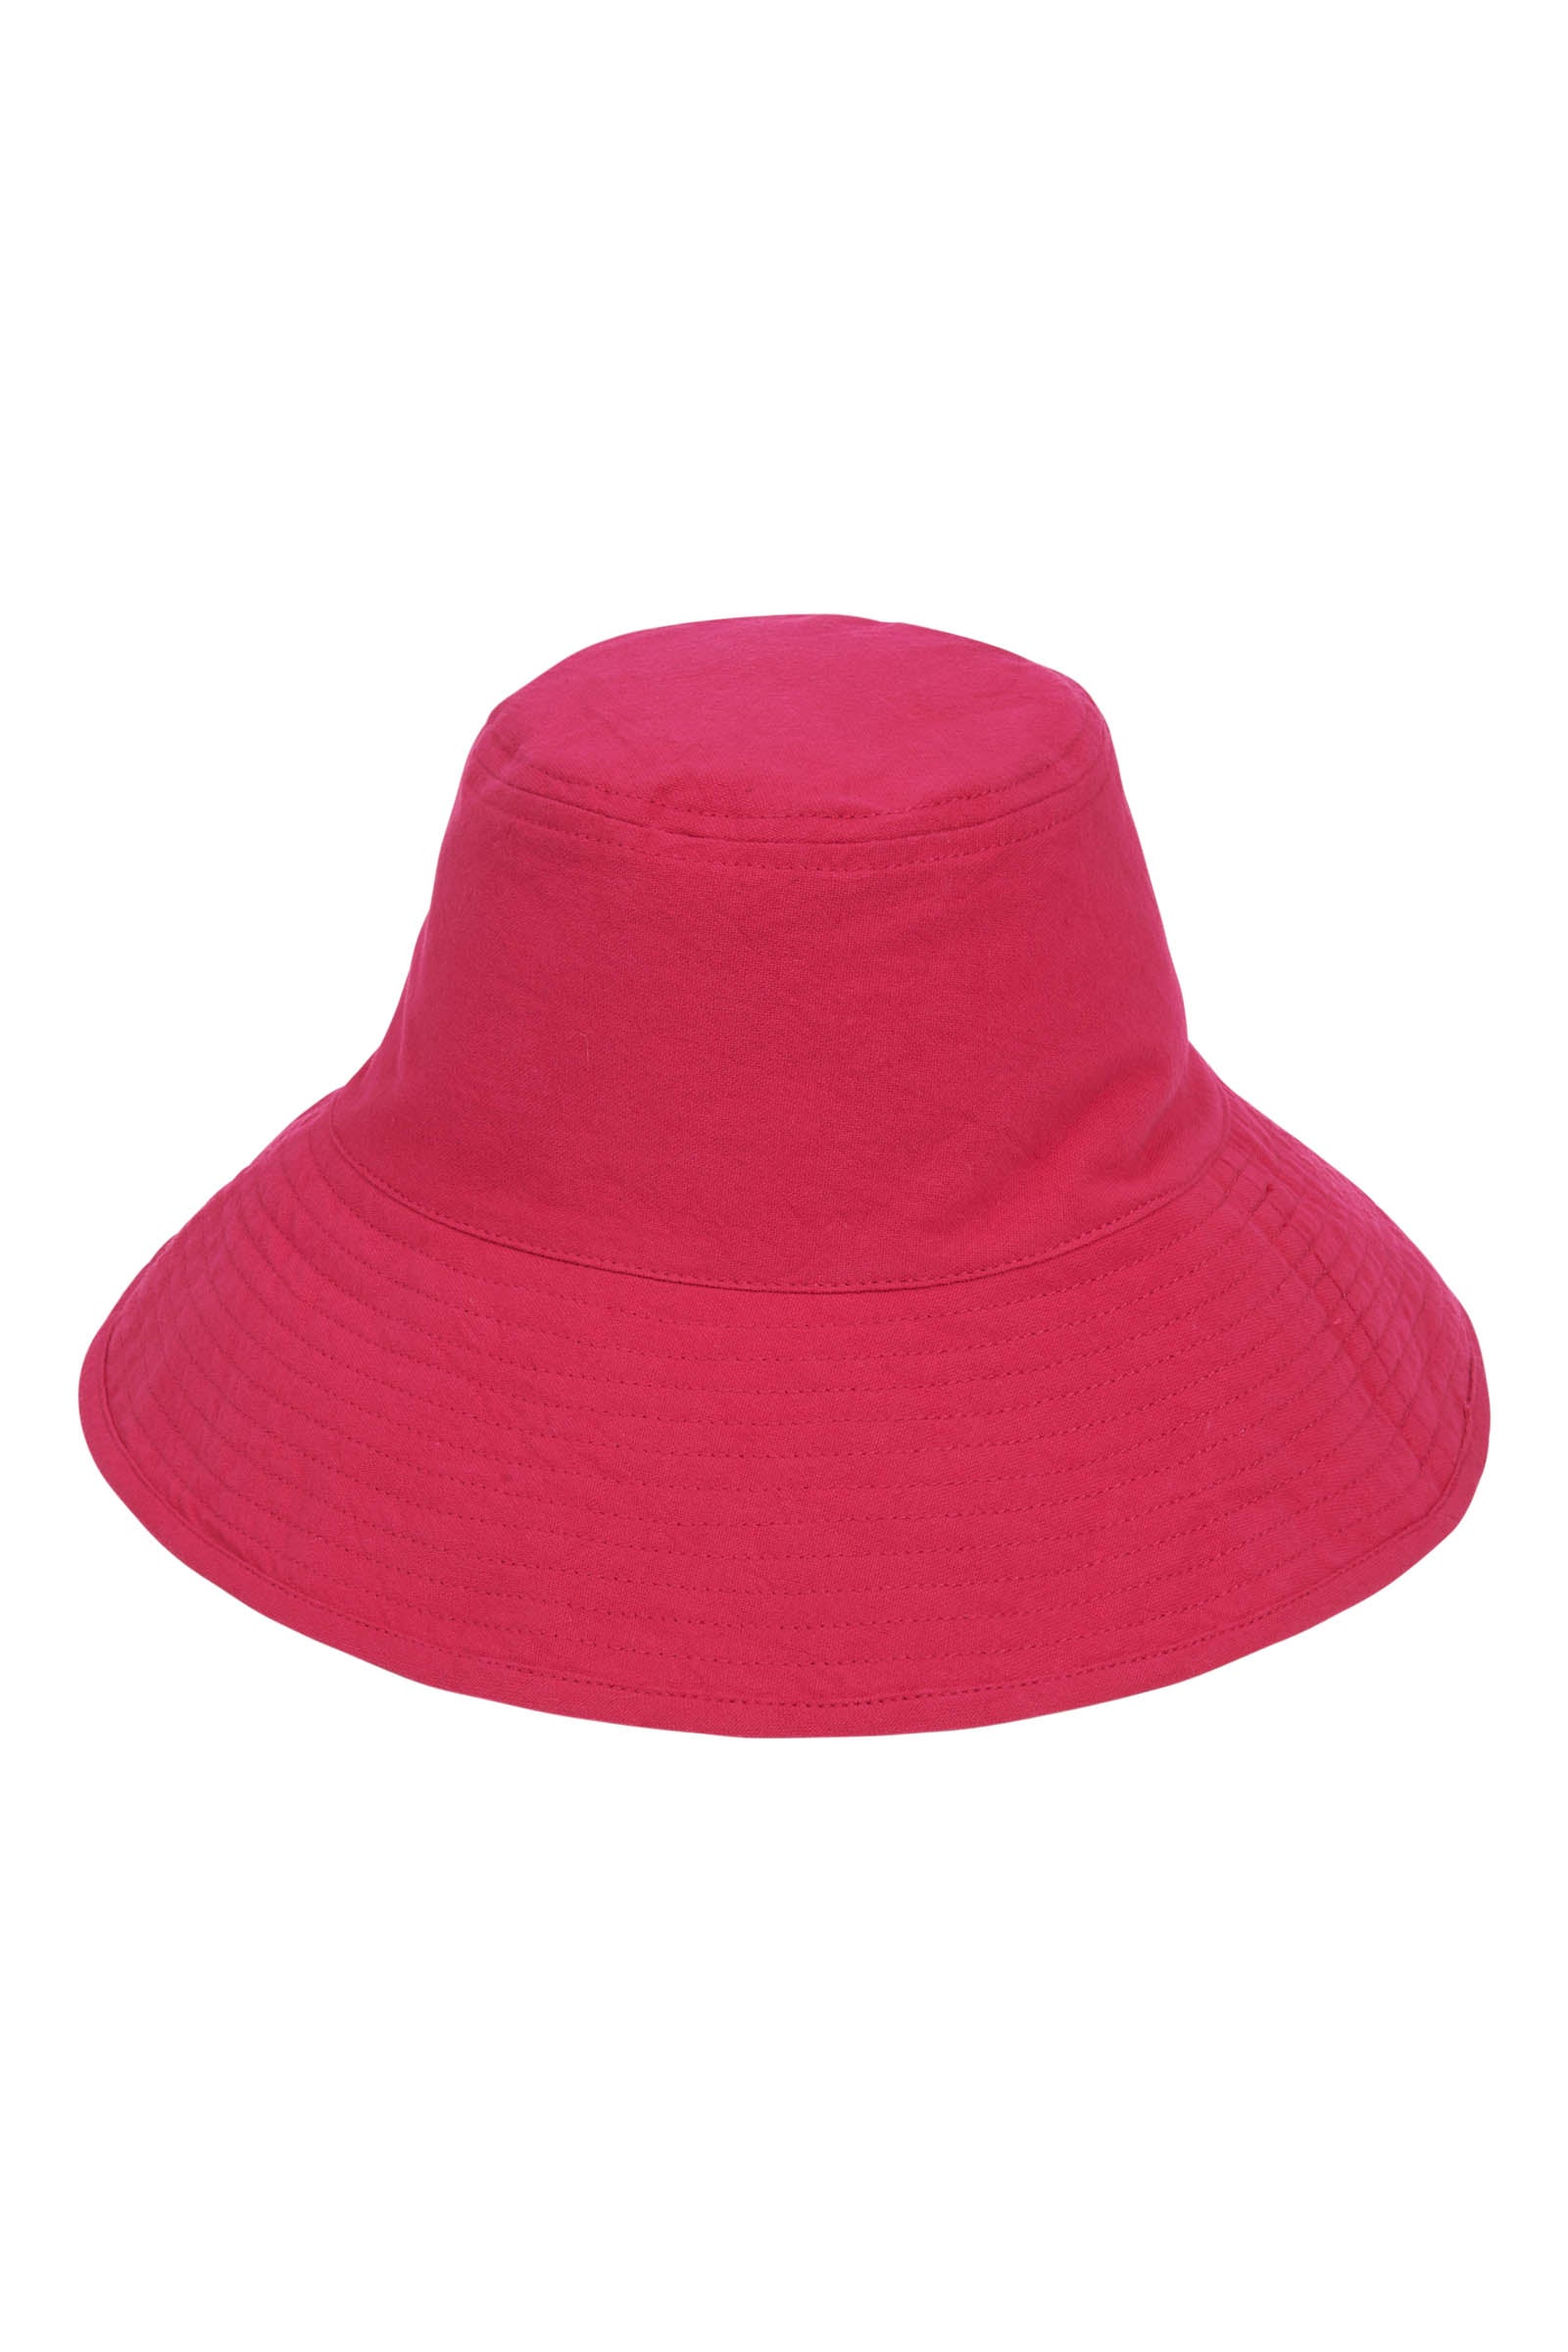 La Vie Hat - Candy - eb&ive Hat